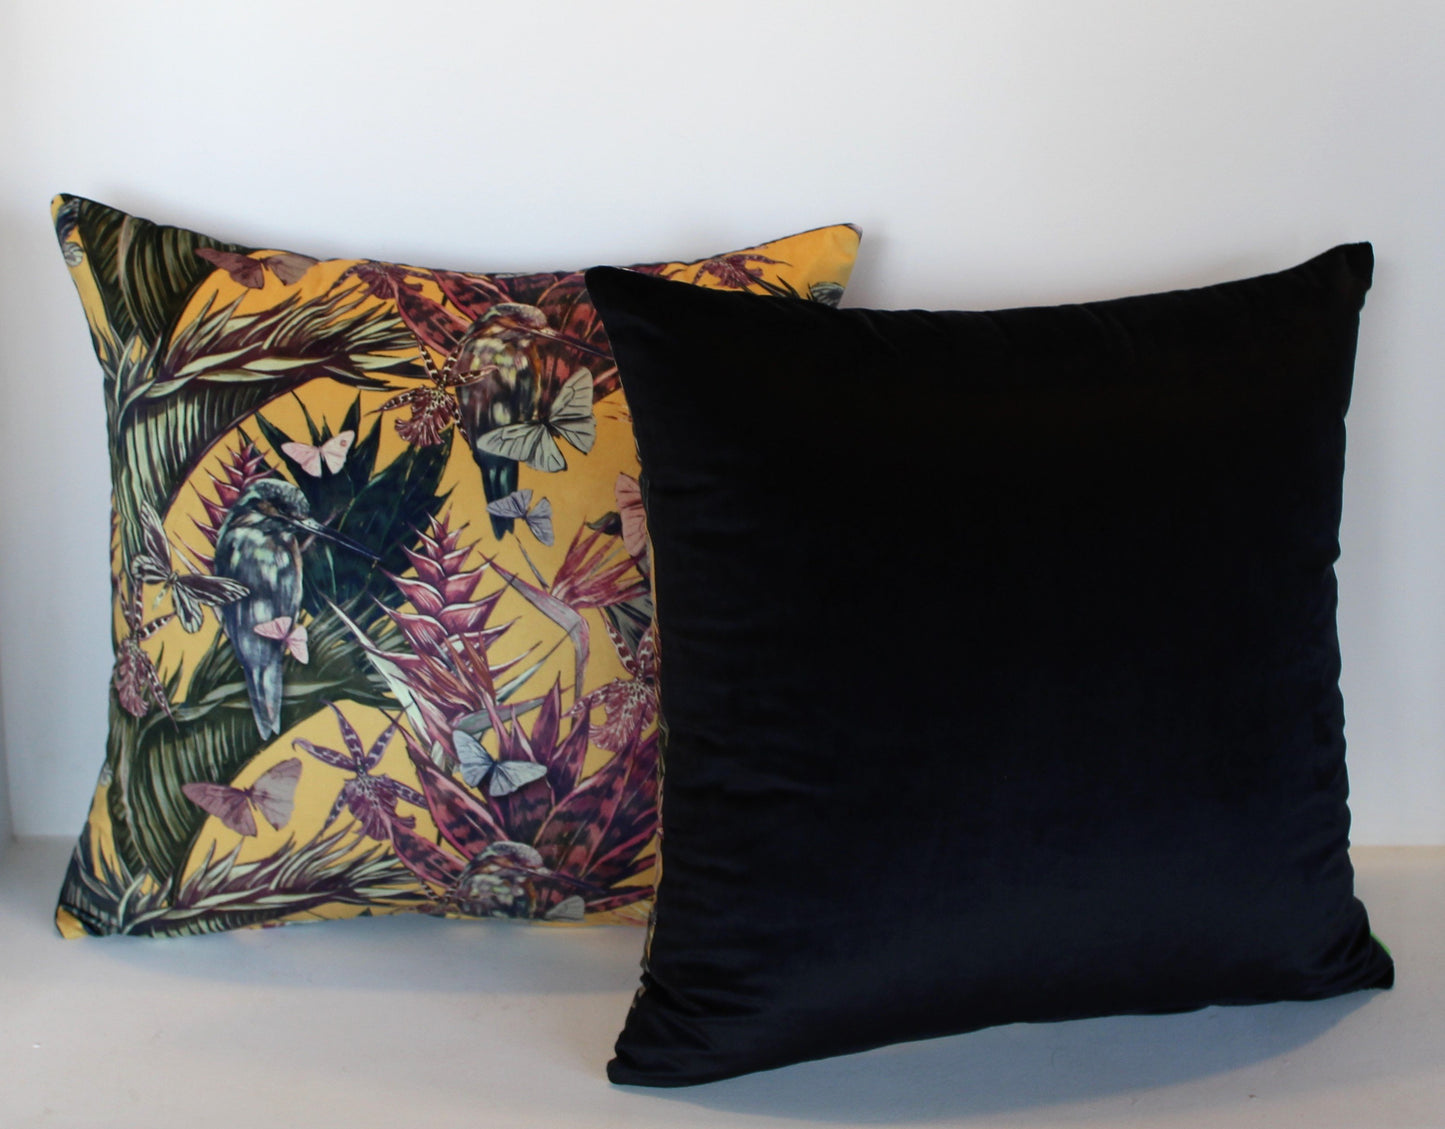 Sunset humming birds - Cushion Cover - 47cm x 47cm